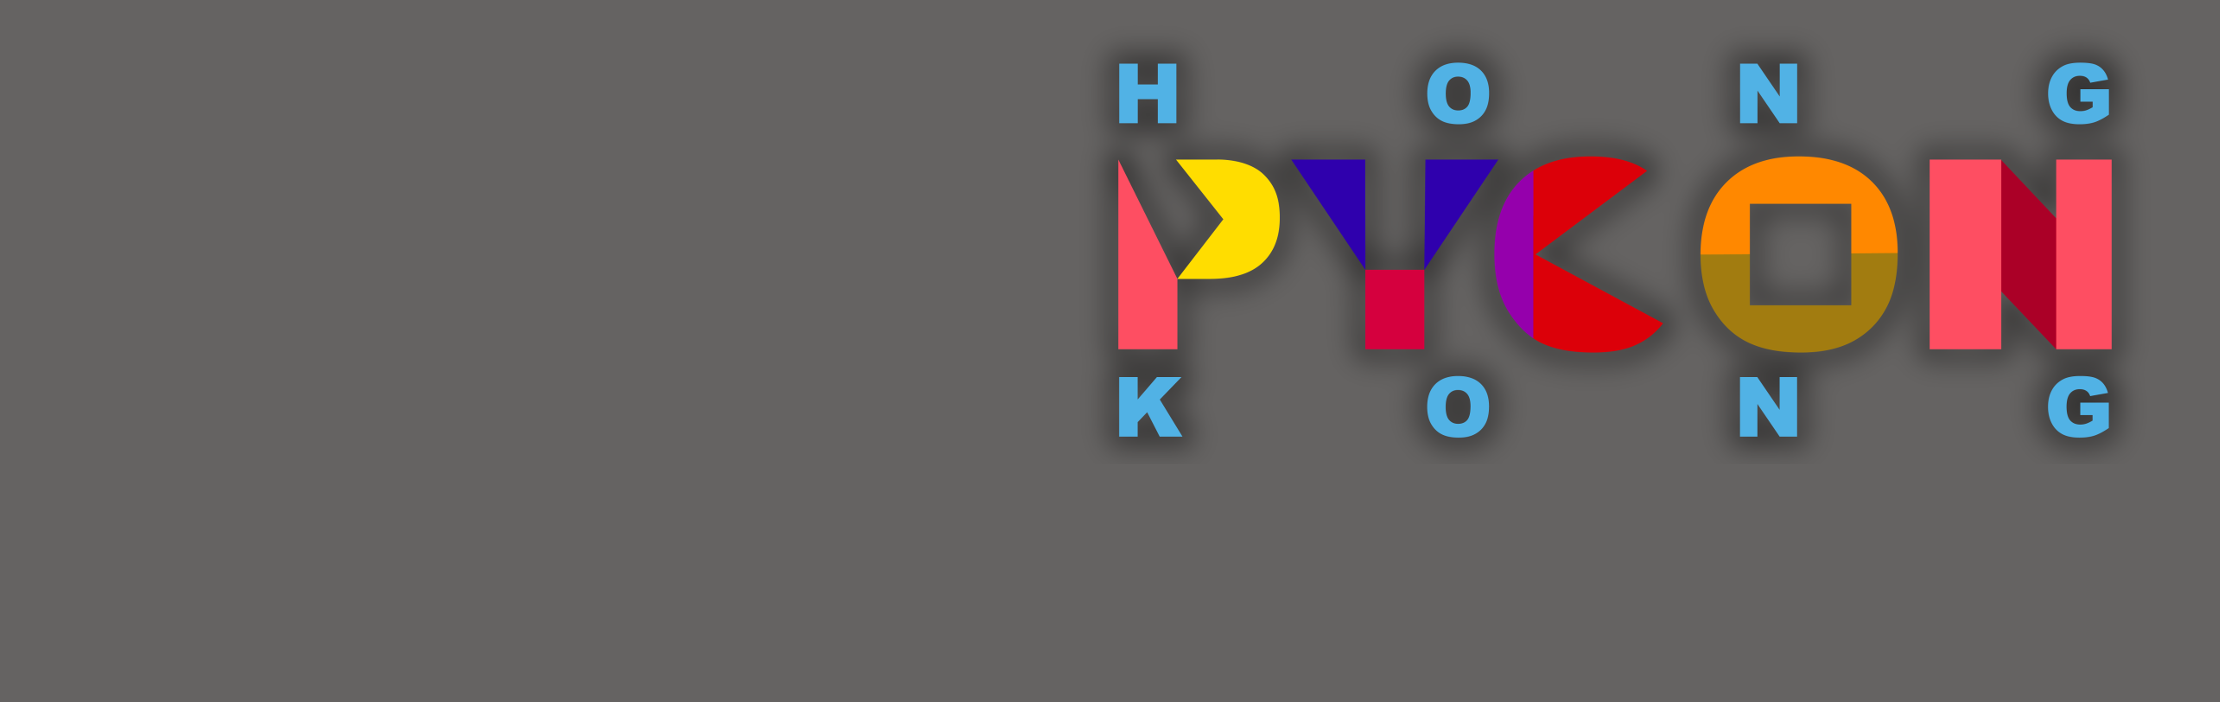 PyCon Hong Kong 2018 is Calling for Proposal